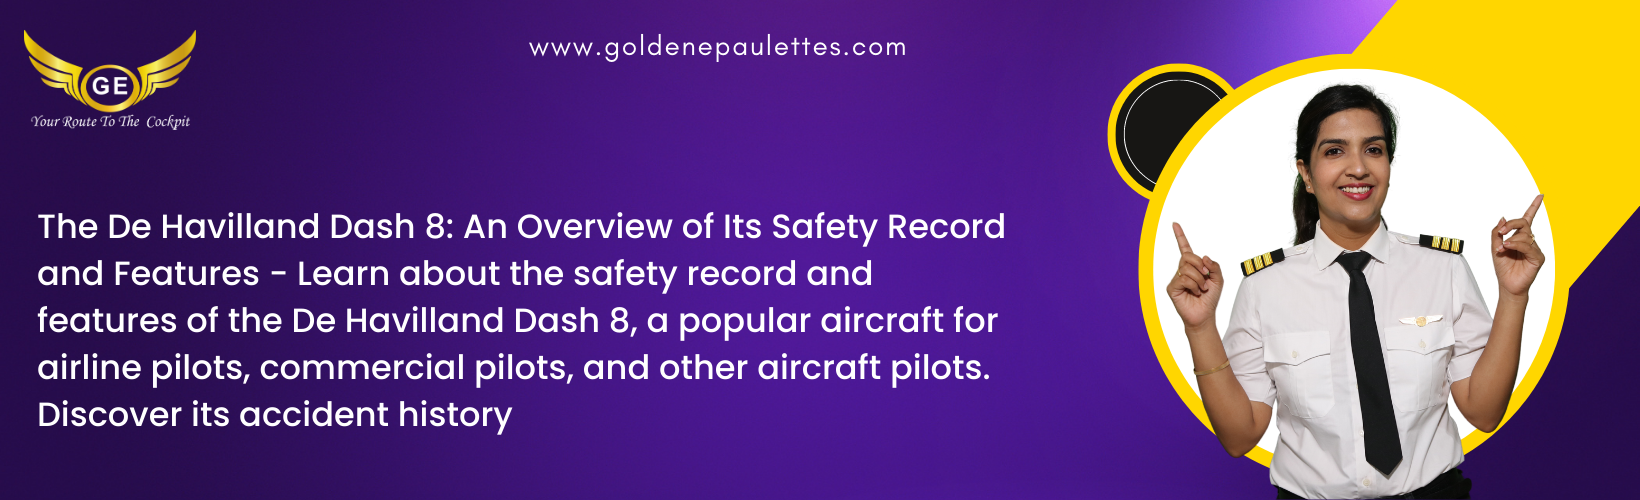 The Safety Record of the De Havilland Dash 8